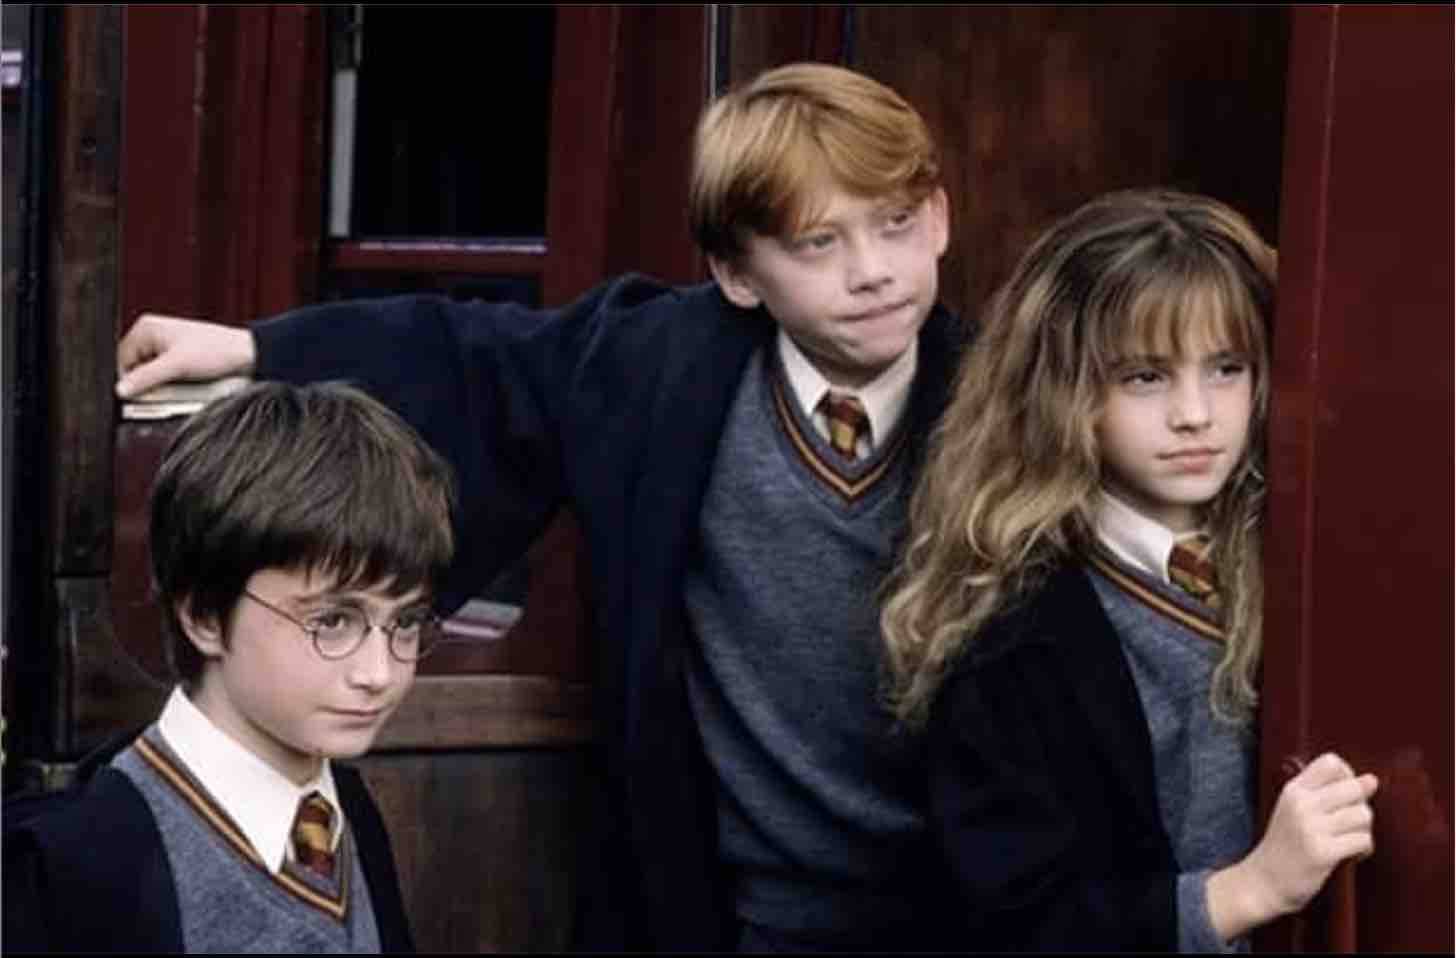 Harry Potter film